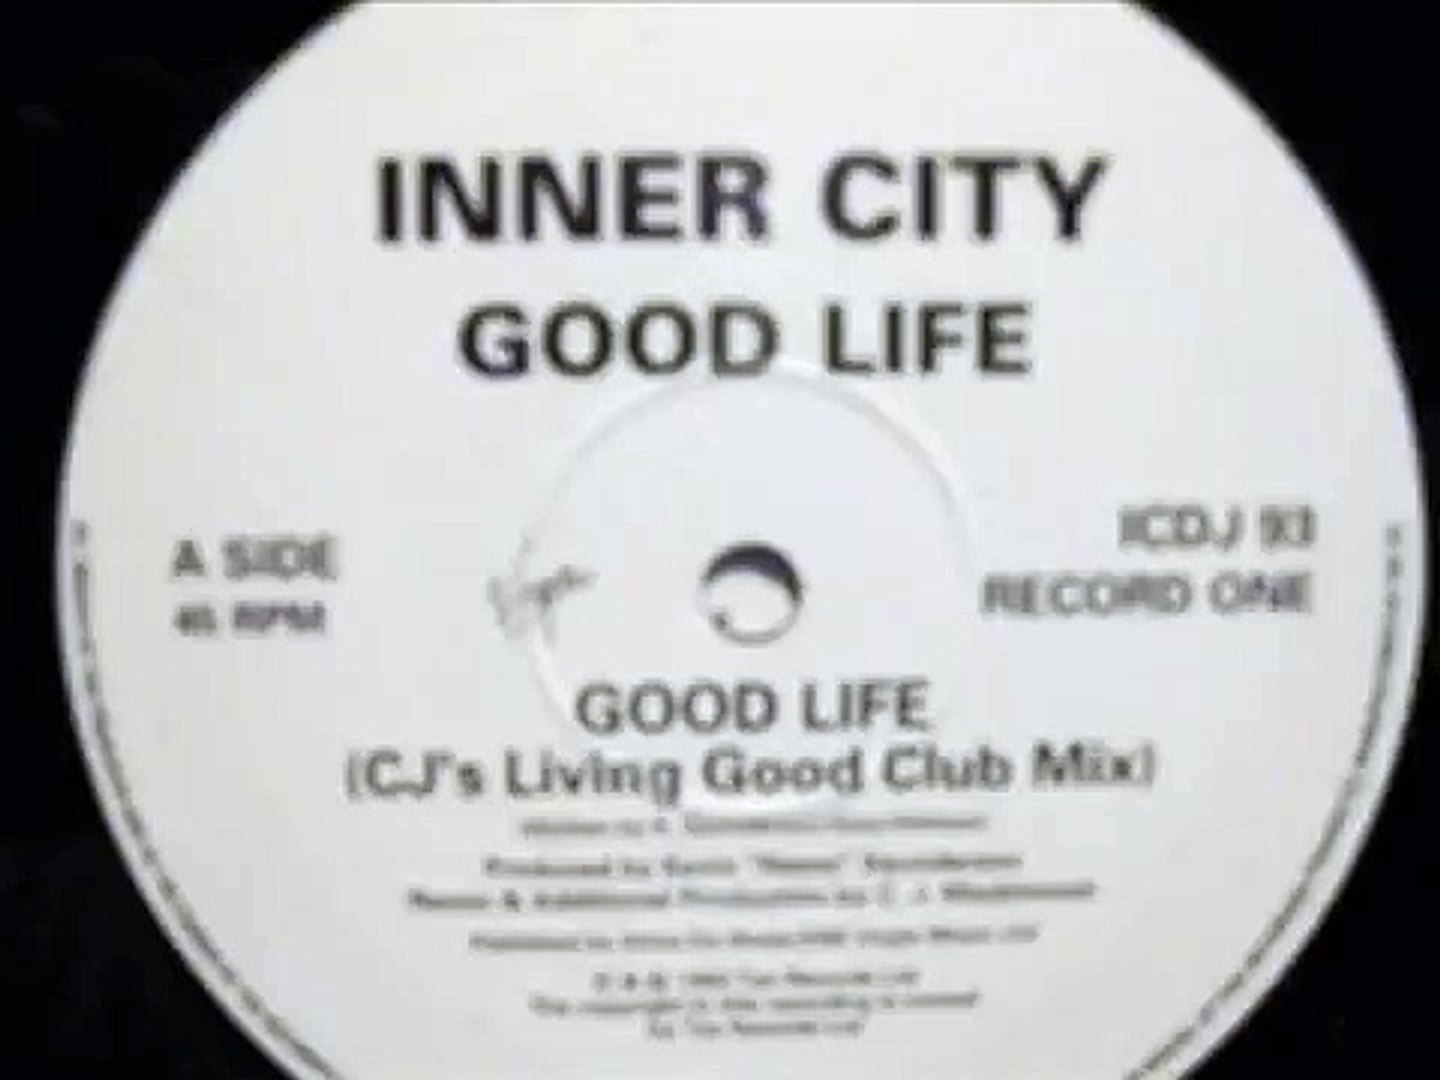 Inner City - Good Life - (CJ's Living Good Club Mix) - video Dailymotion